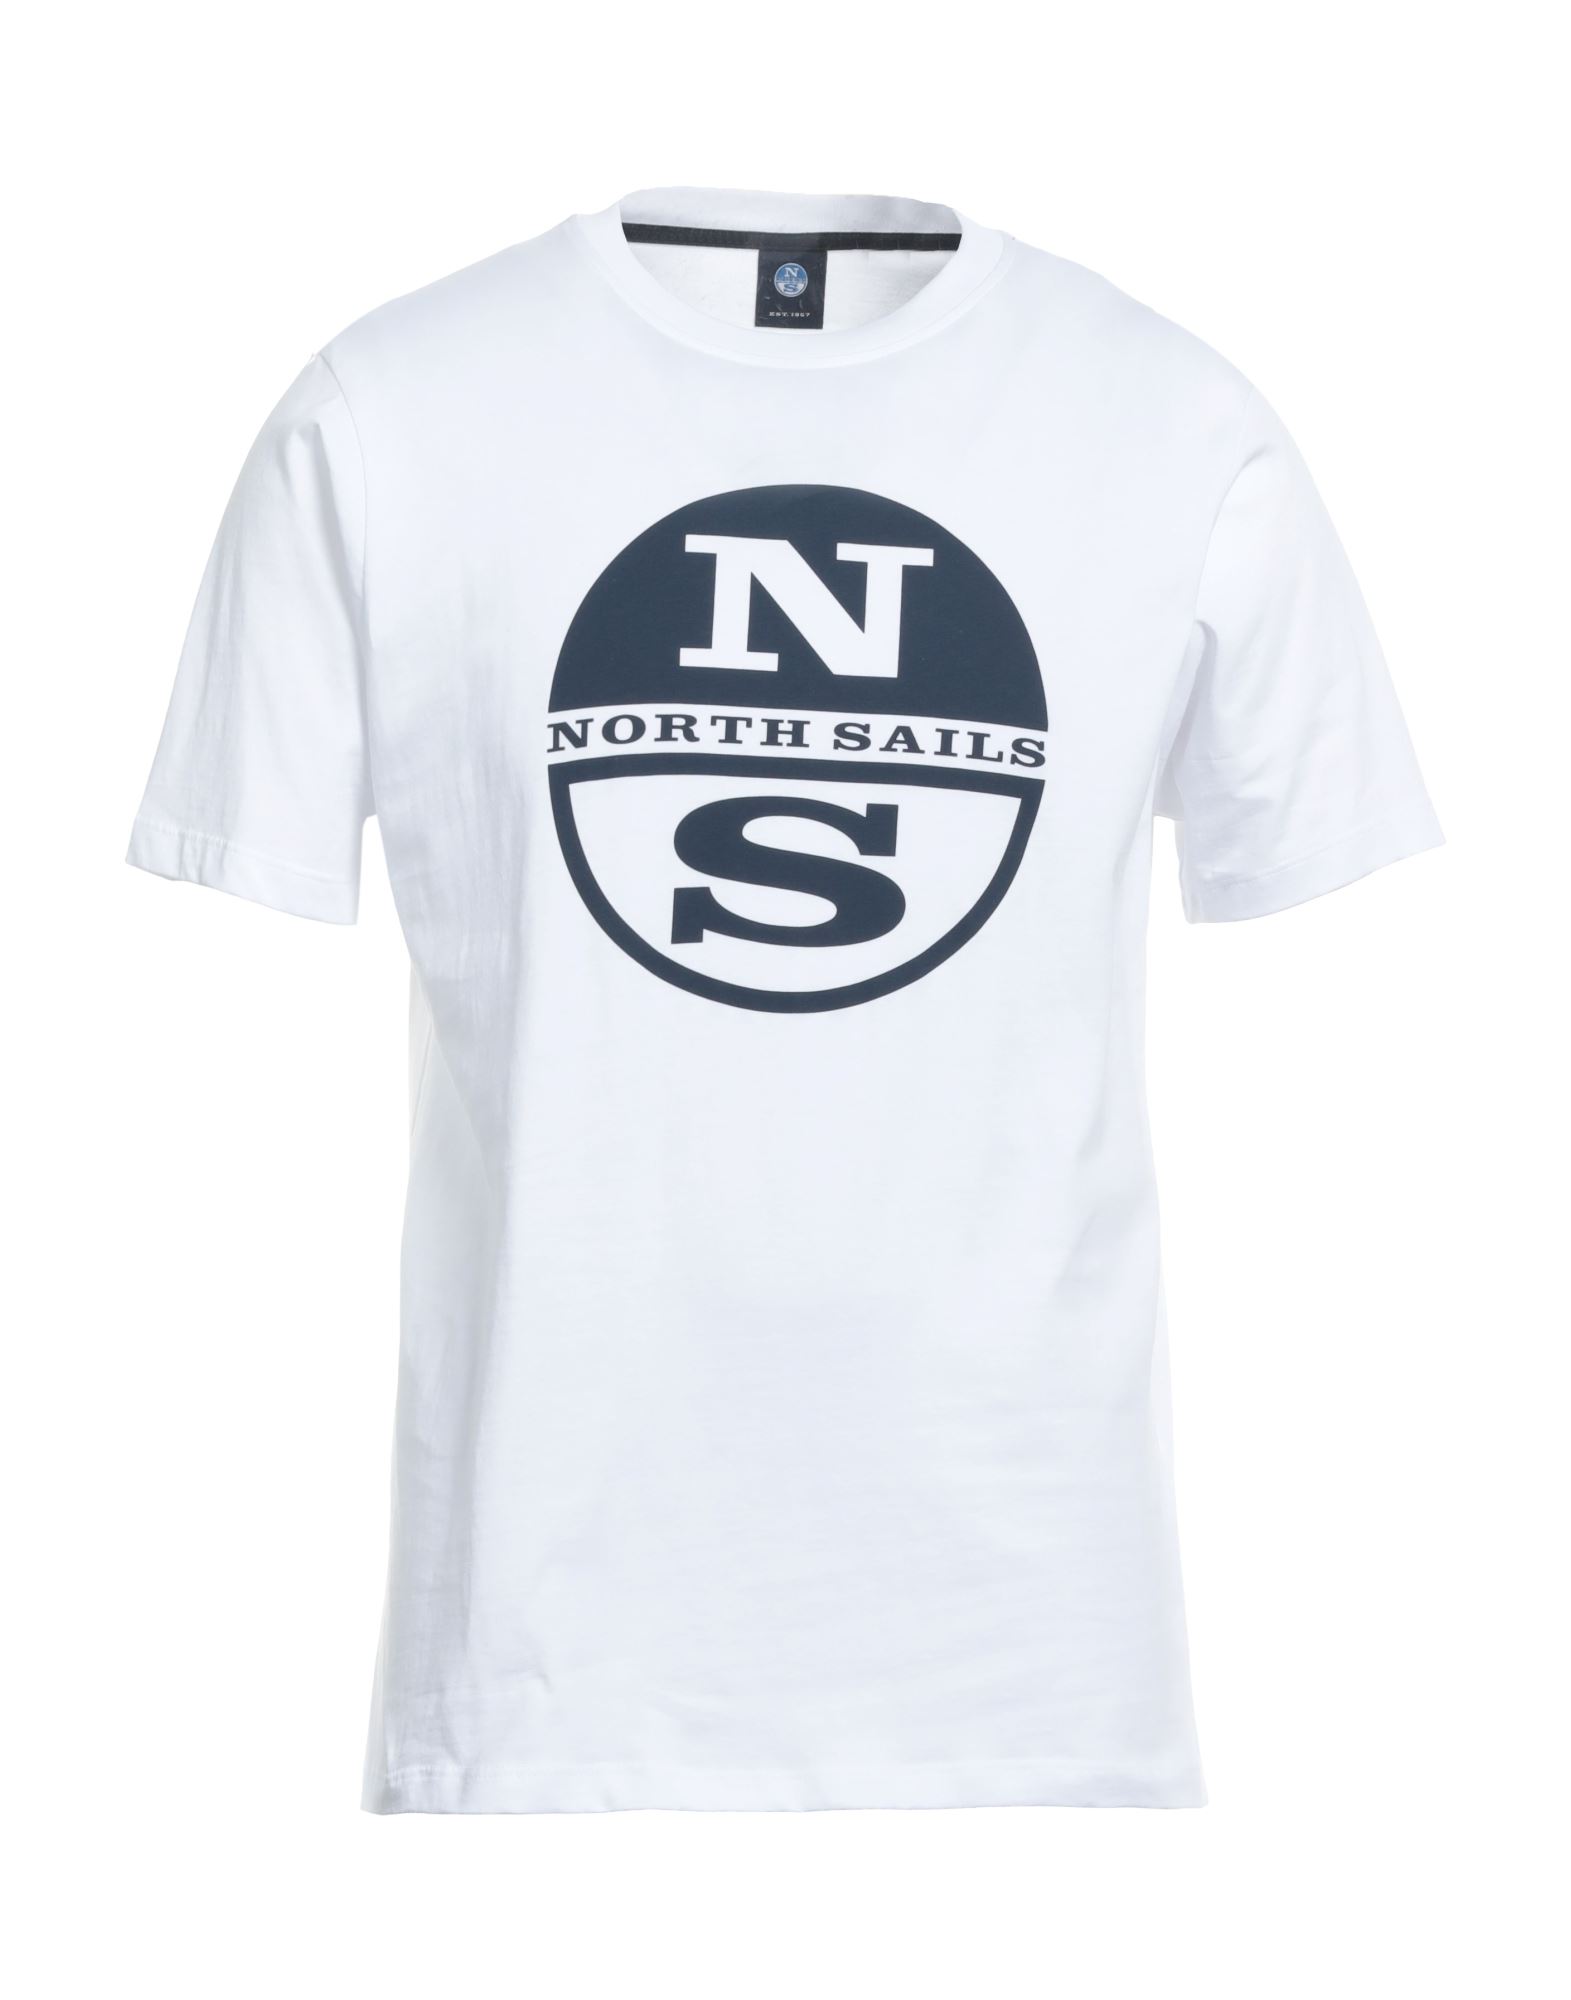 North Sails Man T-shirt White Size M Cotton